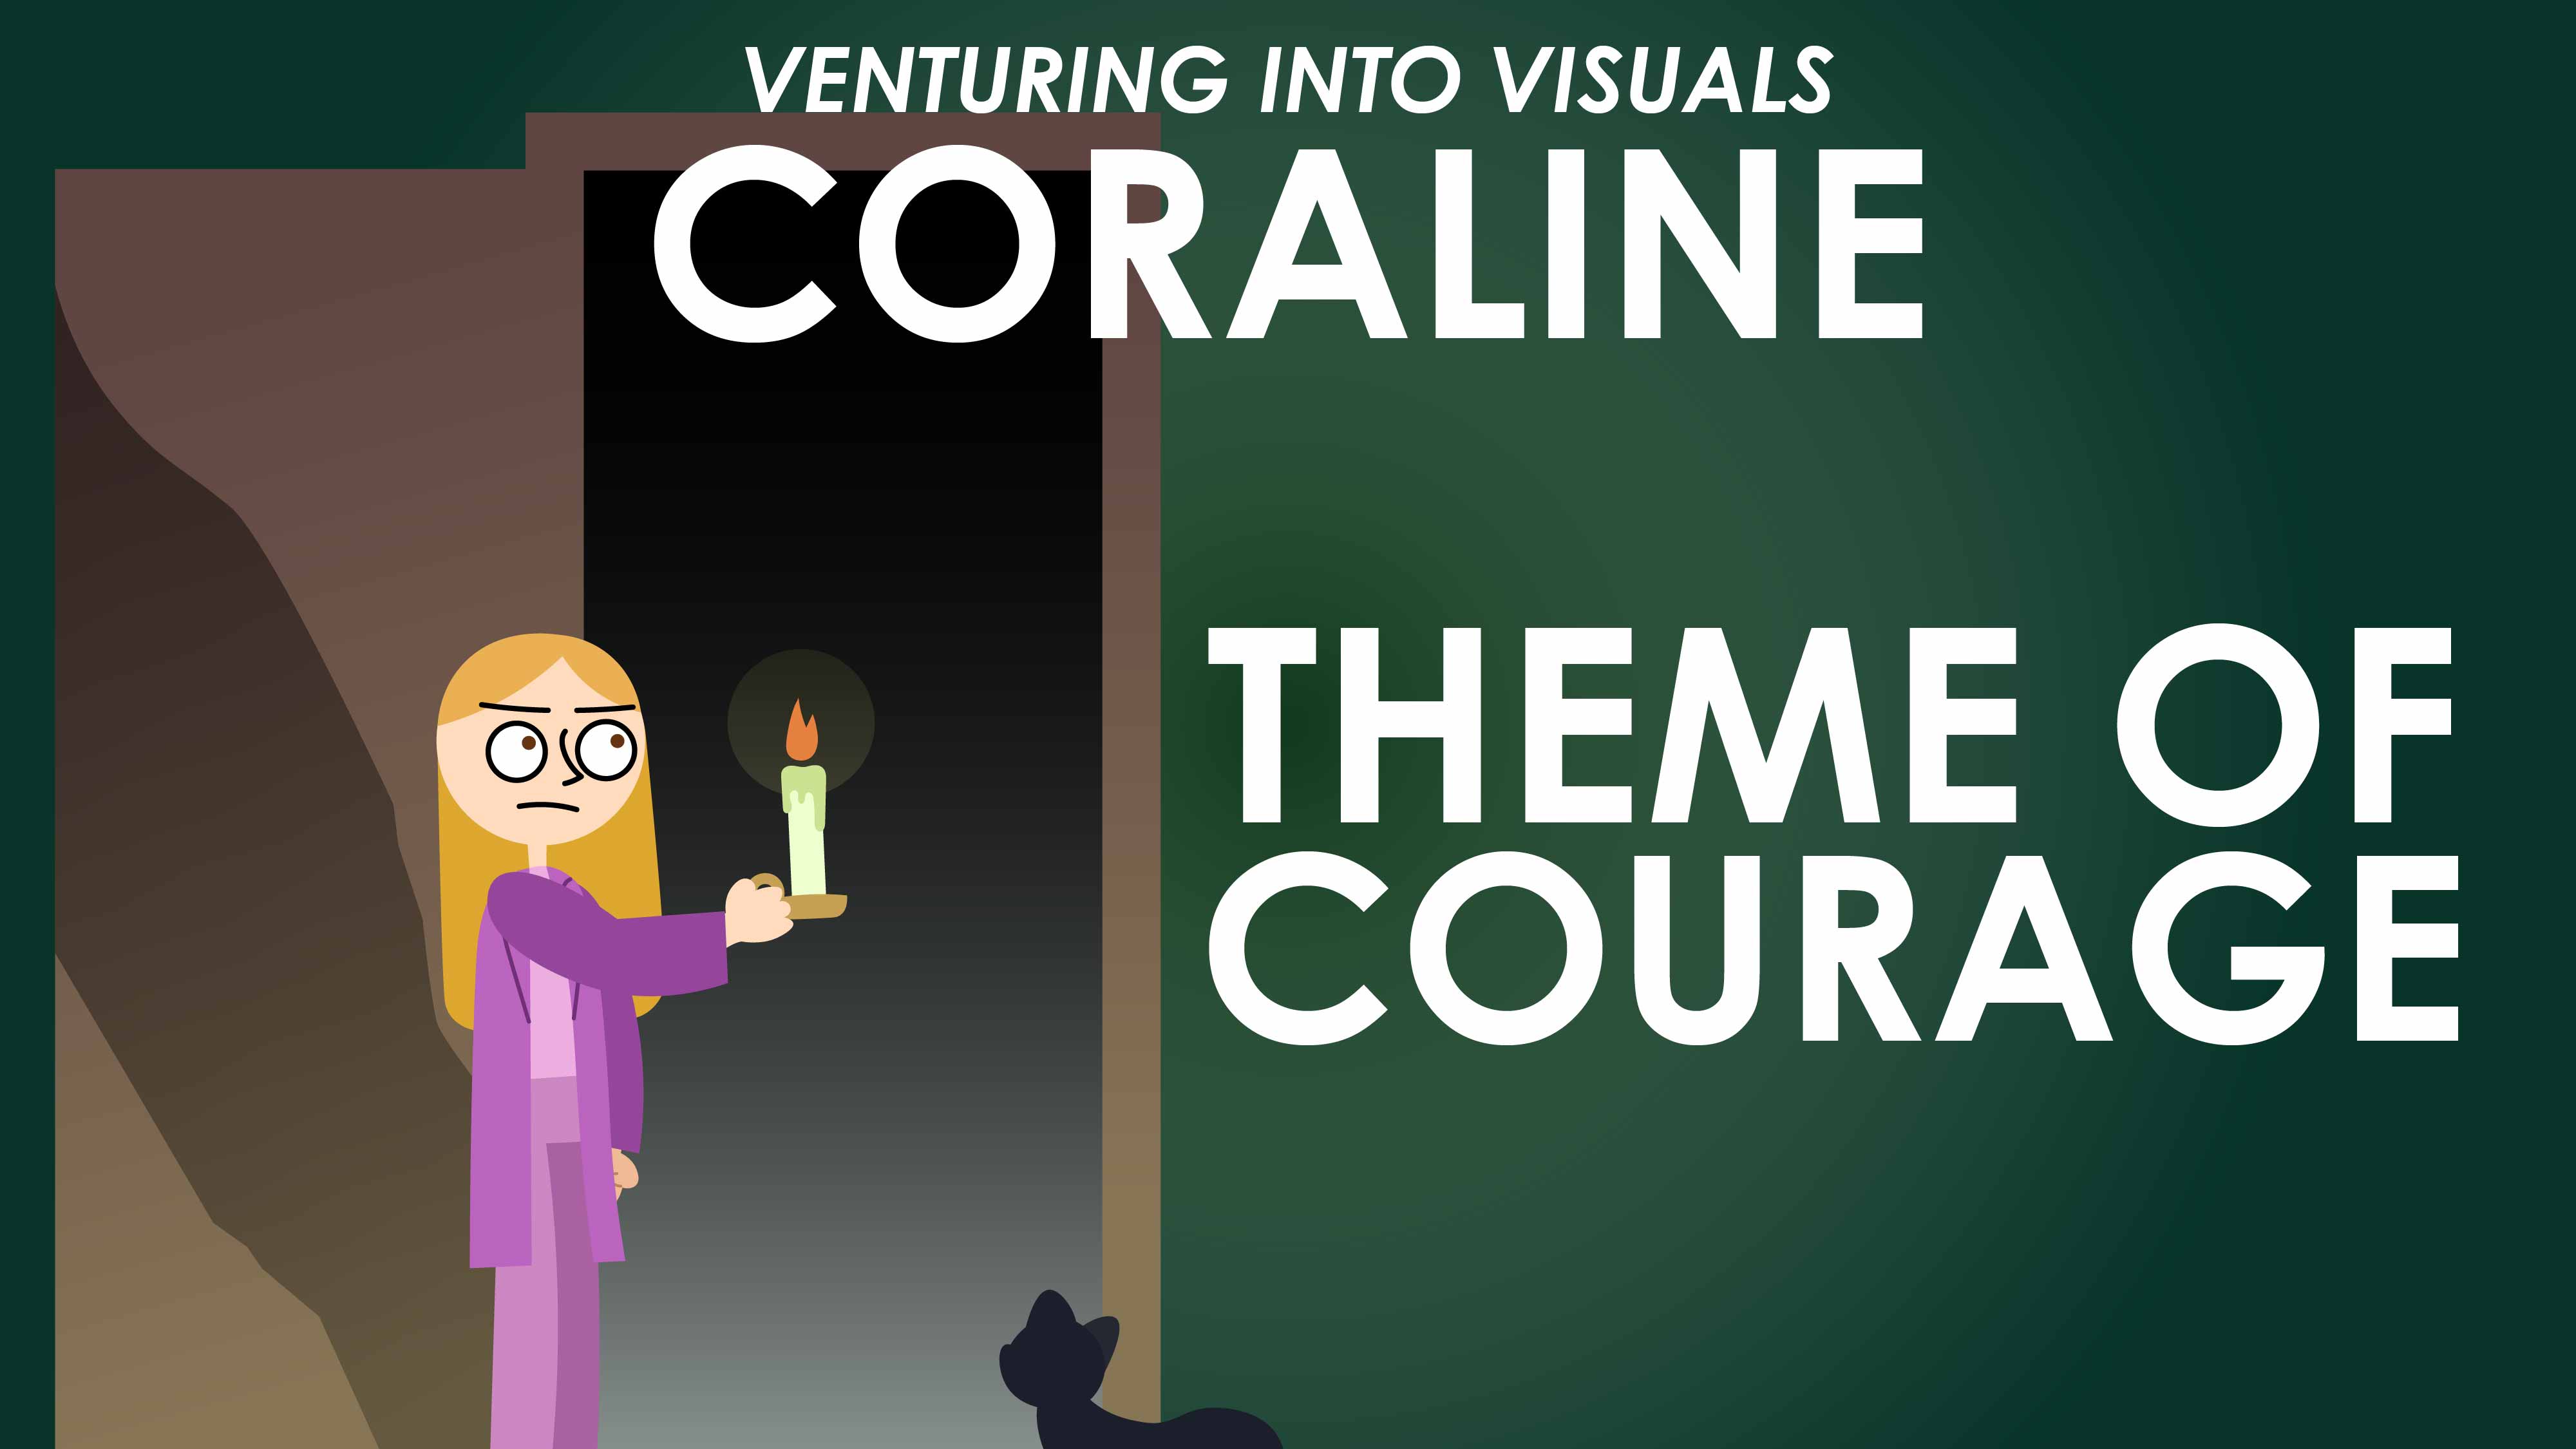 Coraline - Neil Gaiman - Theme of Courage - Venturing Into Visuals Series